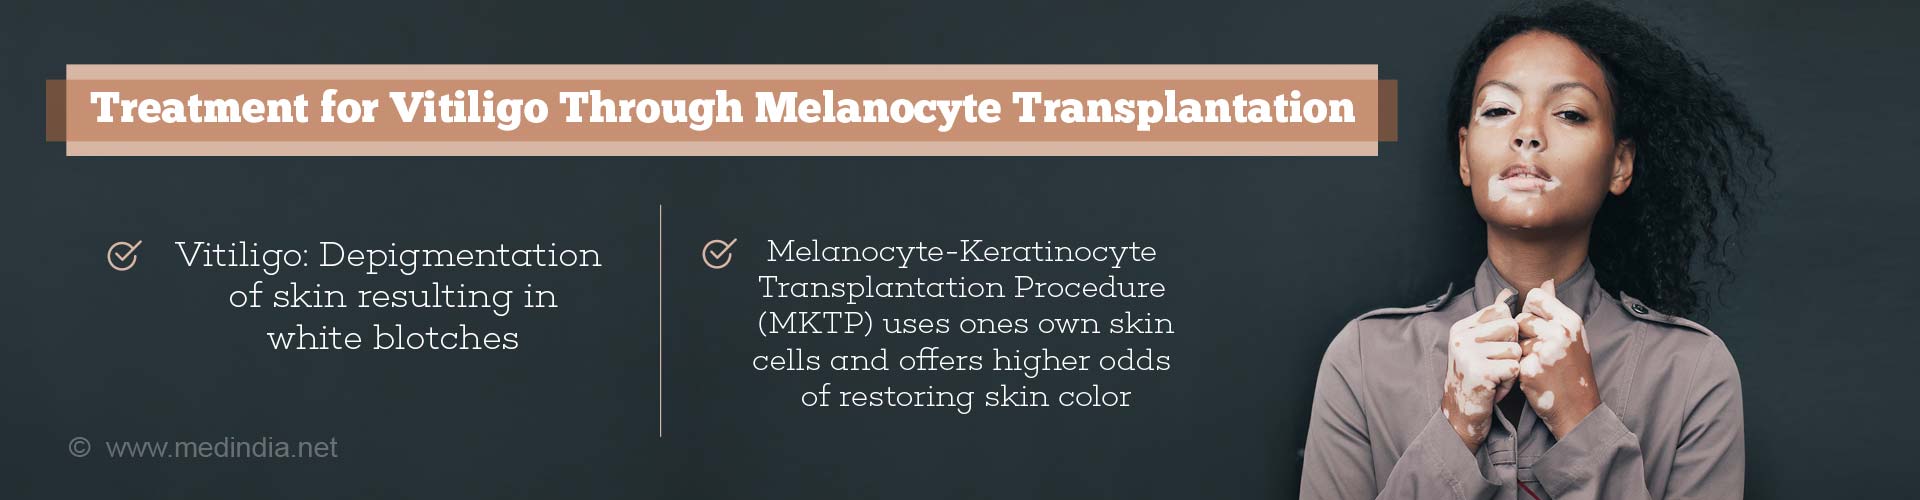 treatment for vitiligo through melanocyte transplantation
- vitiligo: depigmentation of skin resulting in white blotches
- melanocyte-keratinocyte trasplantation procedure (mktp) uses one's own cells and offers high odds of restoring skin color